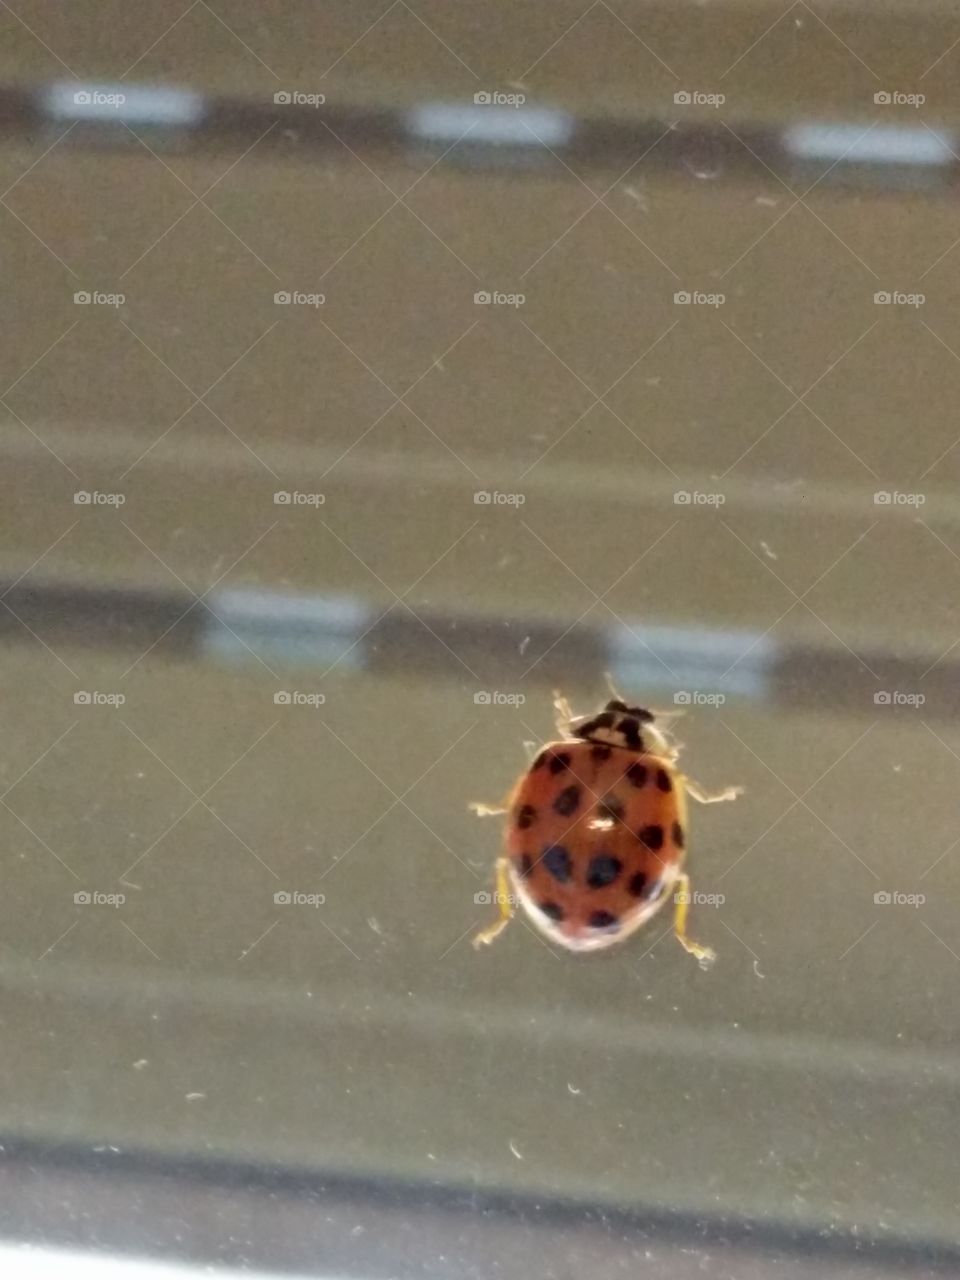 Ladybug climbing on a home window